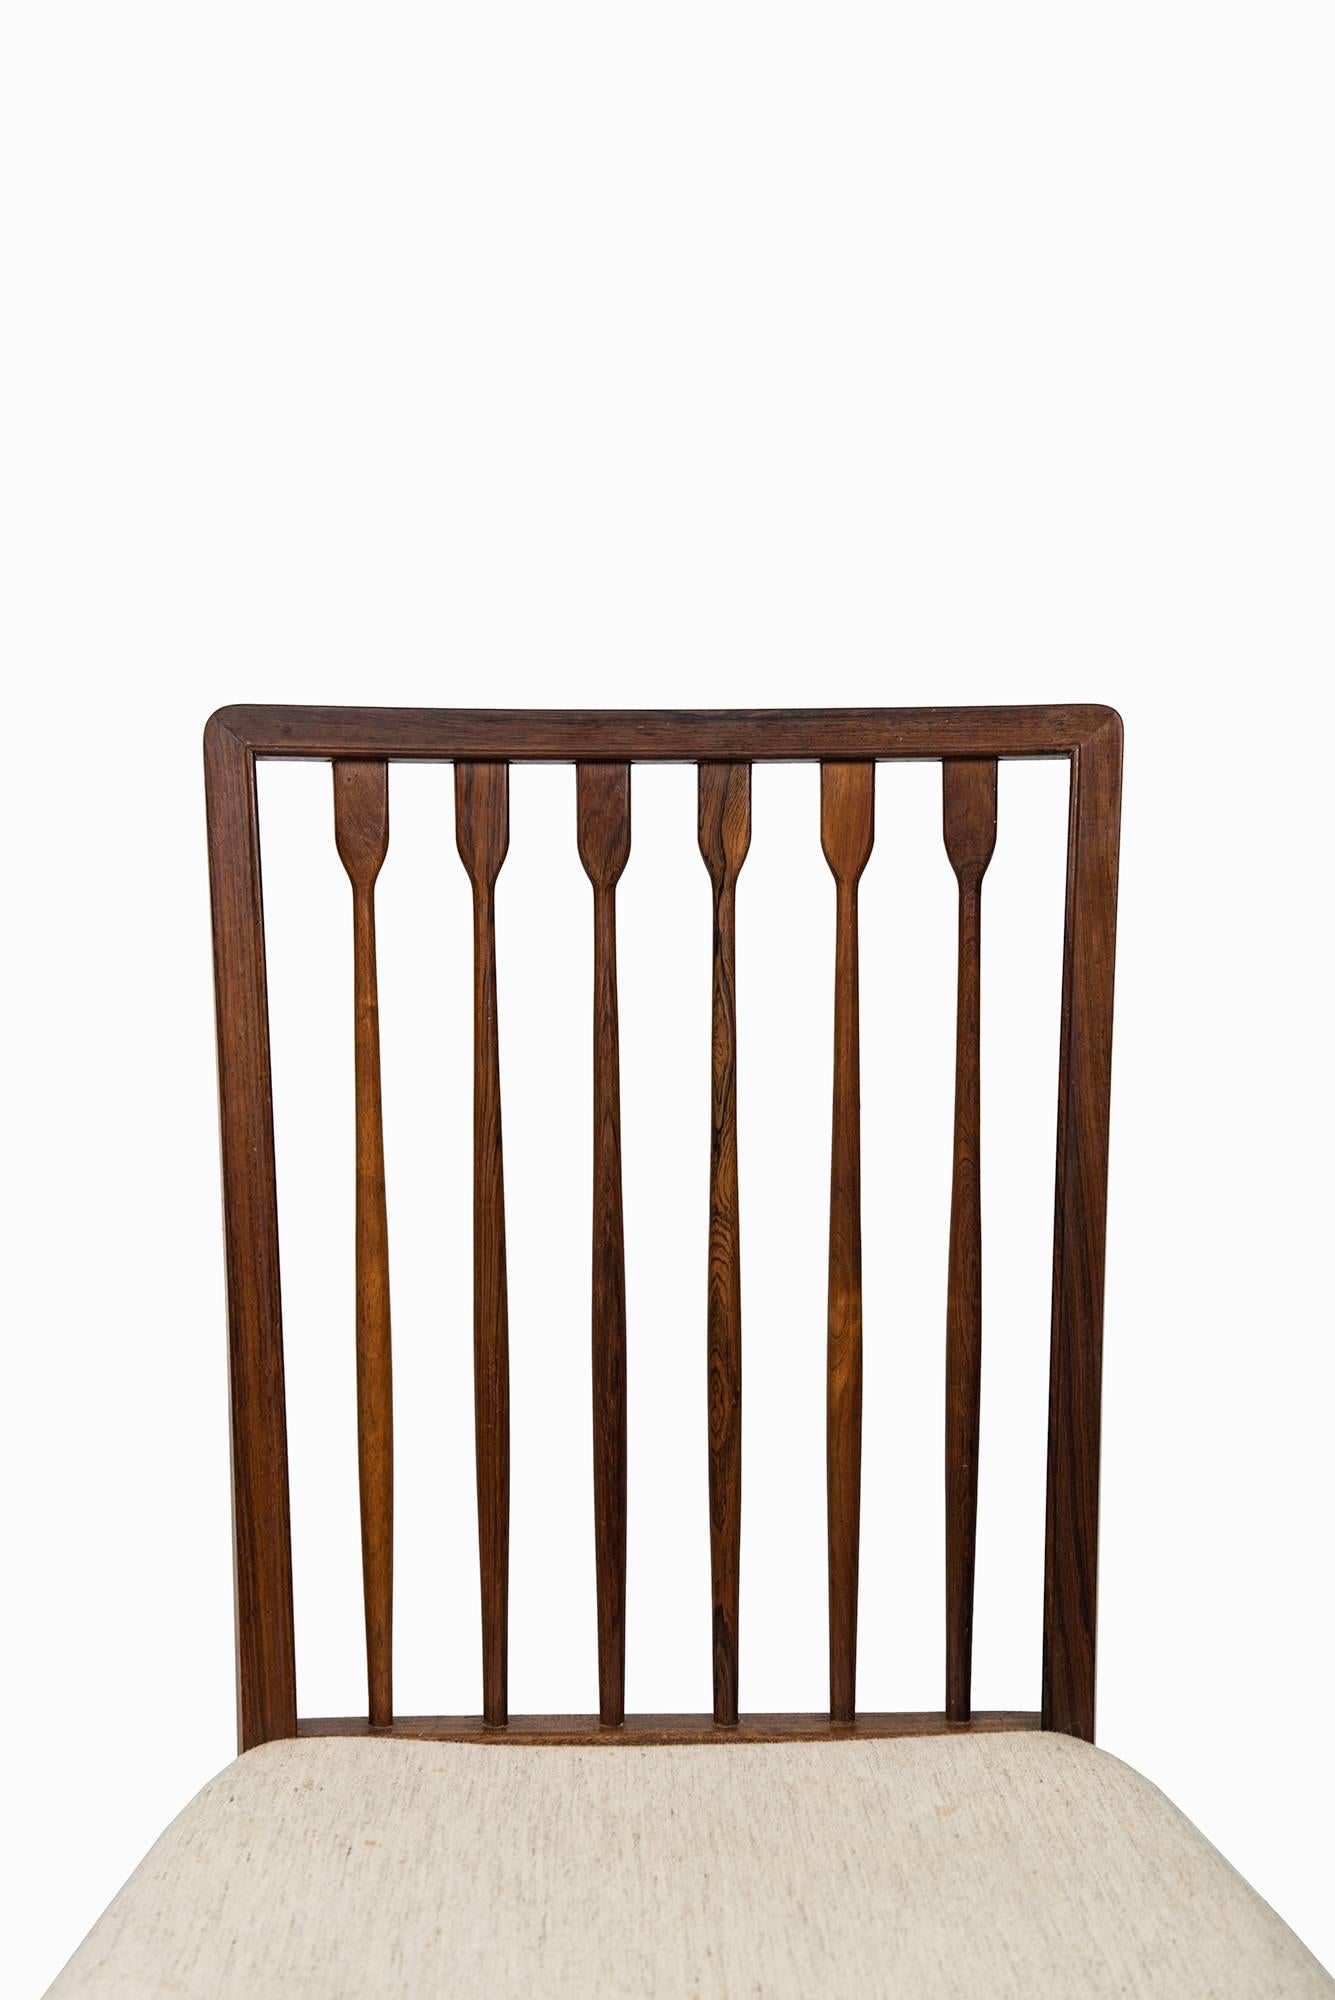 Scandinavian Modern Rare Set of Eight Dining Chairs Designed by Agner Christoffersen in Denmark